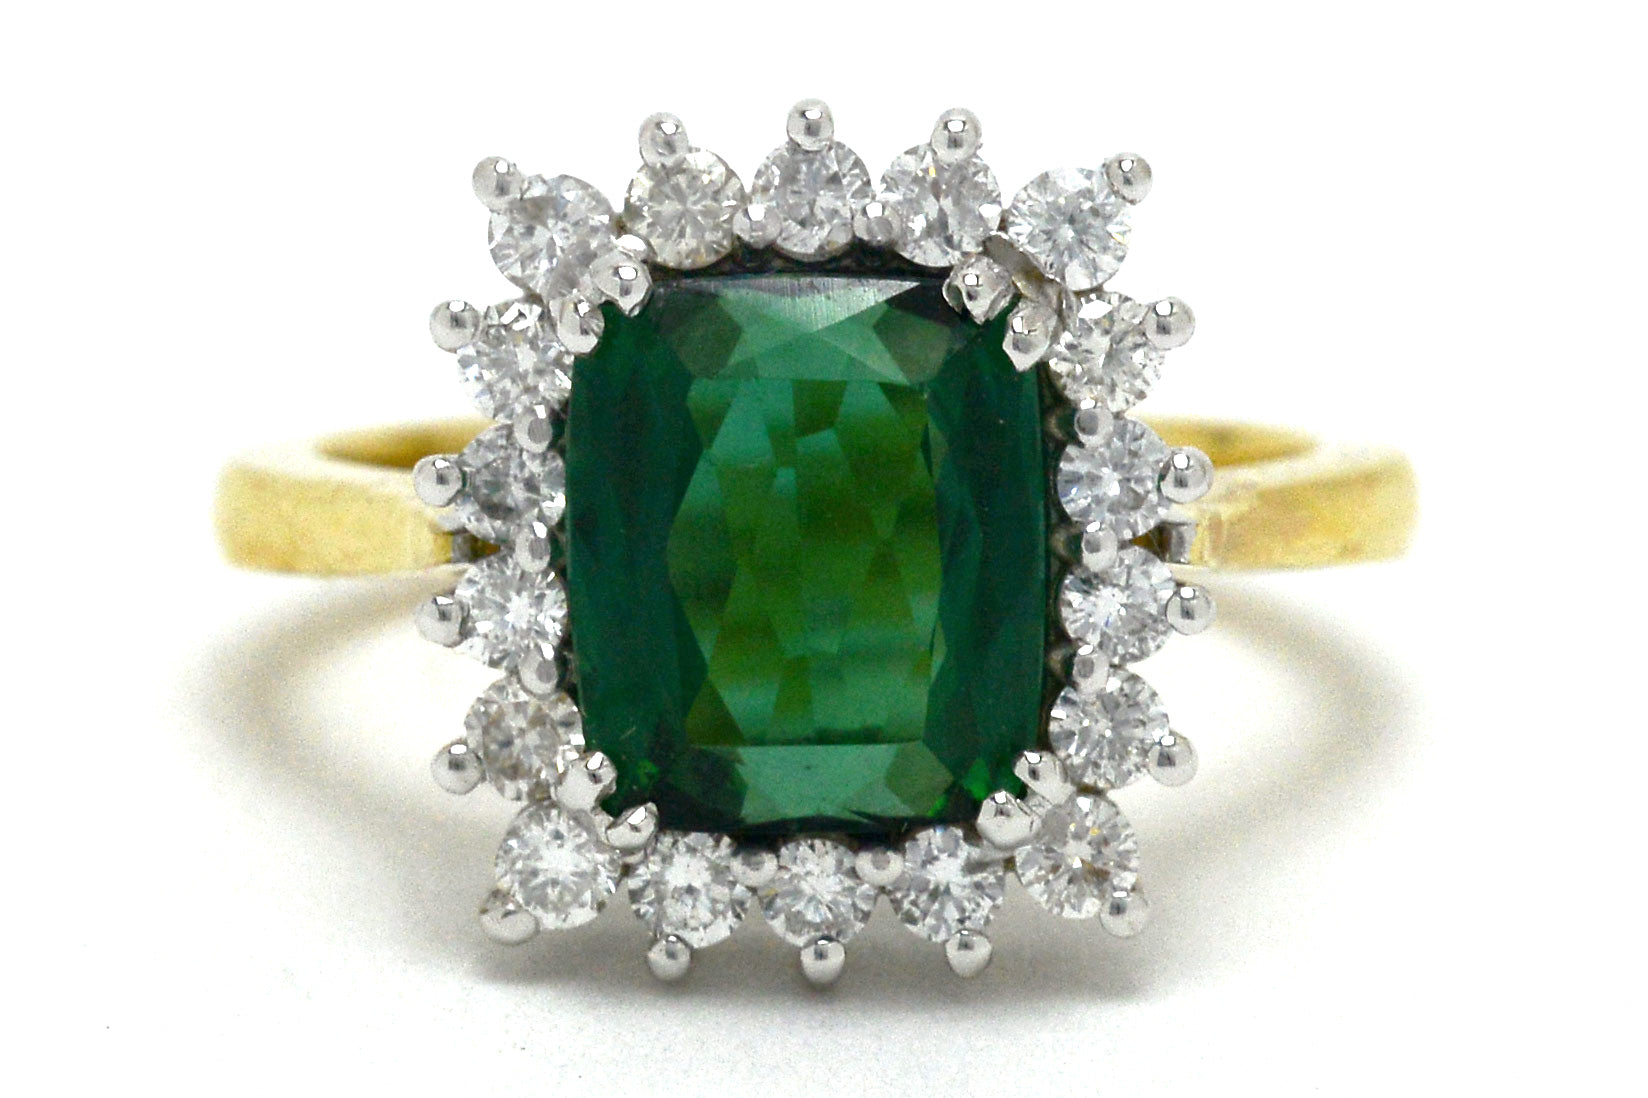 A Princess Diana style green tourmaline diamond target engagement ring.